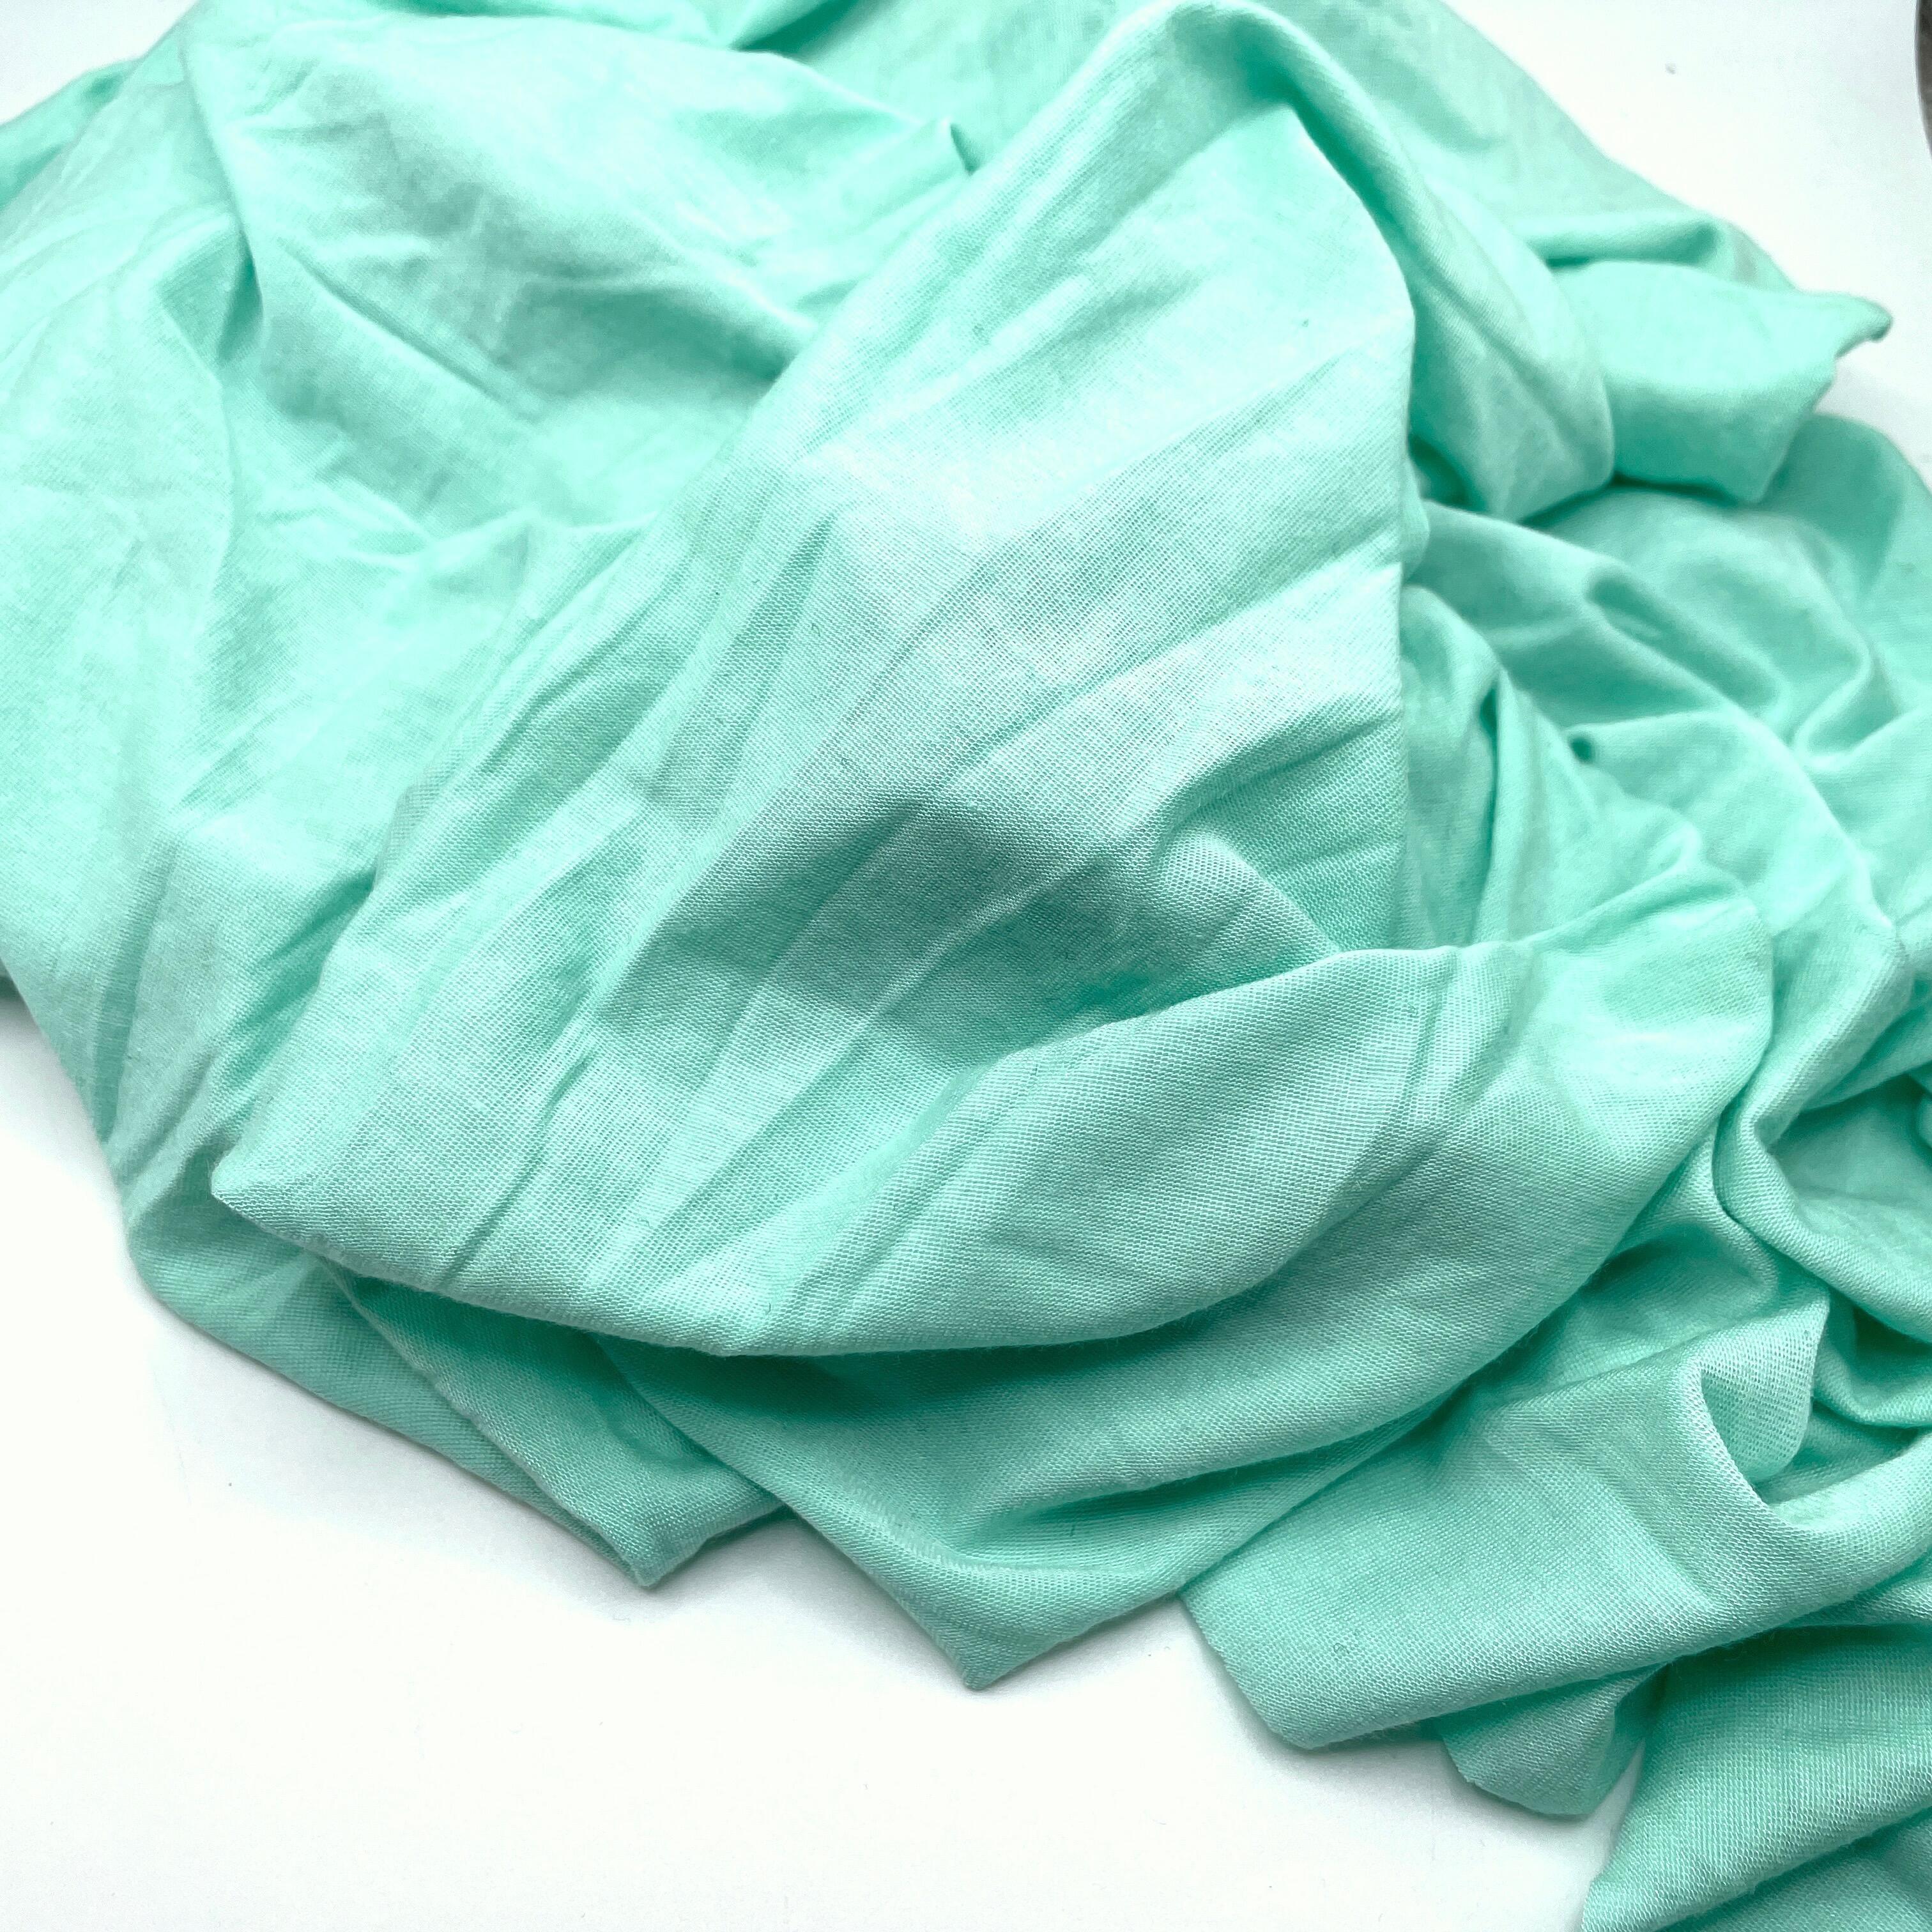 Pastel GREEN (mint) - Stretch Fabric - Knicker/lingerie - Micro Modal  140gsm - cotton jersey, per piece